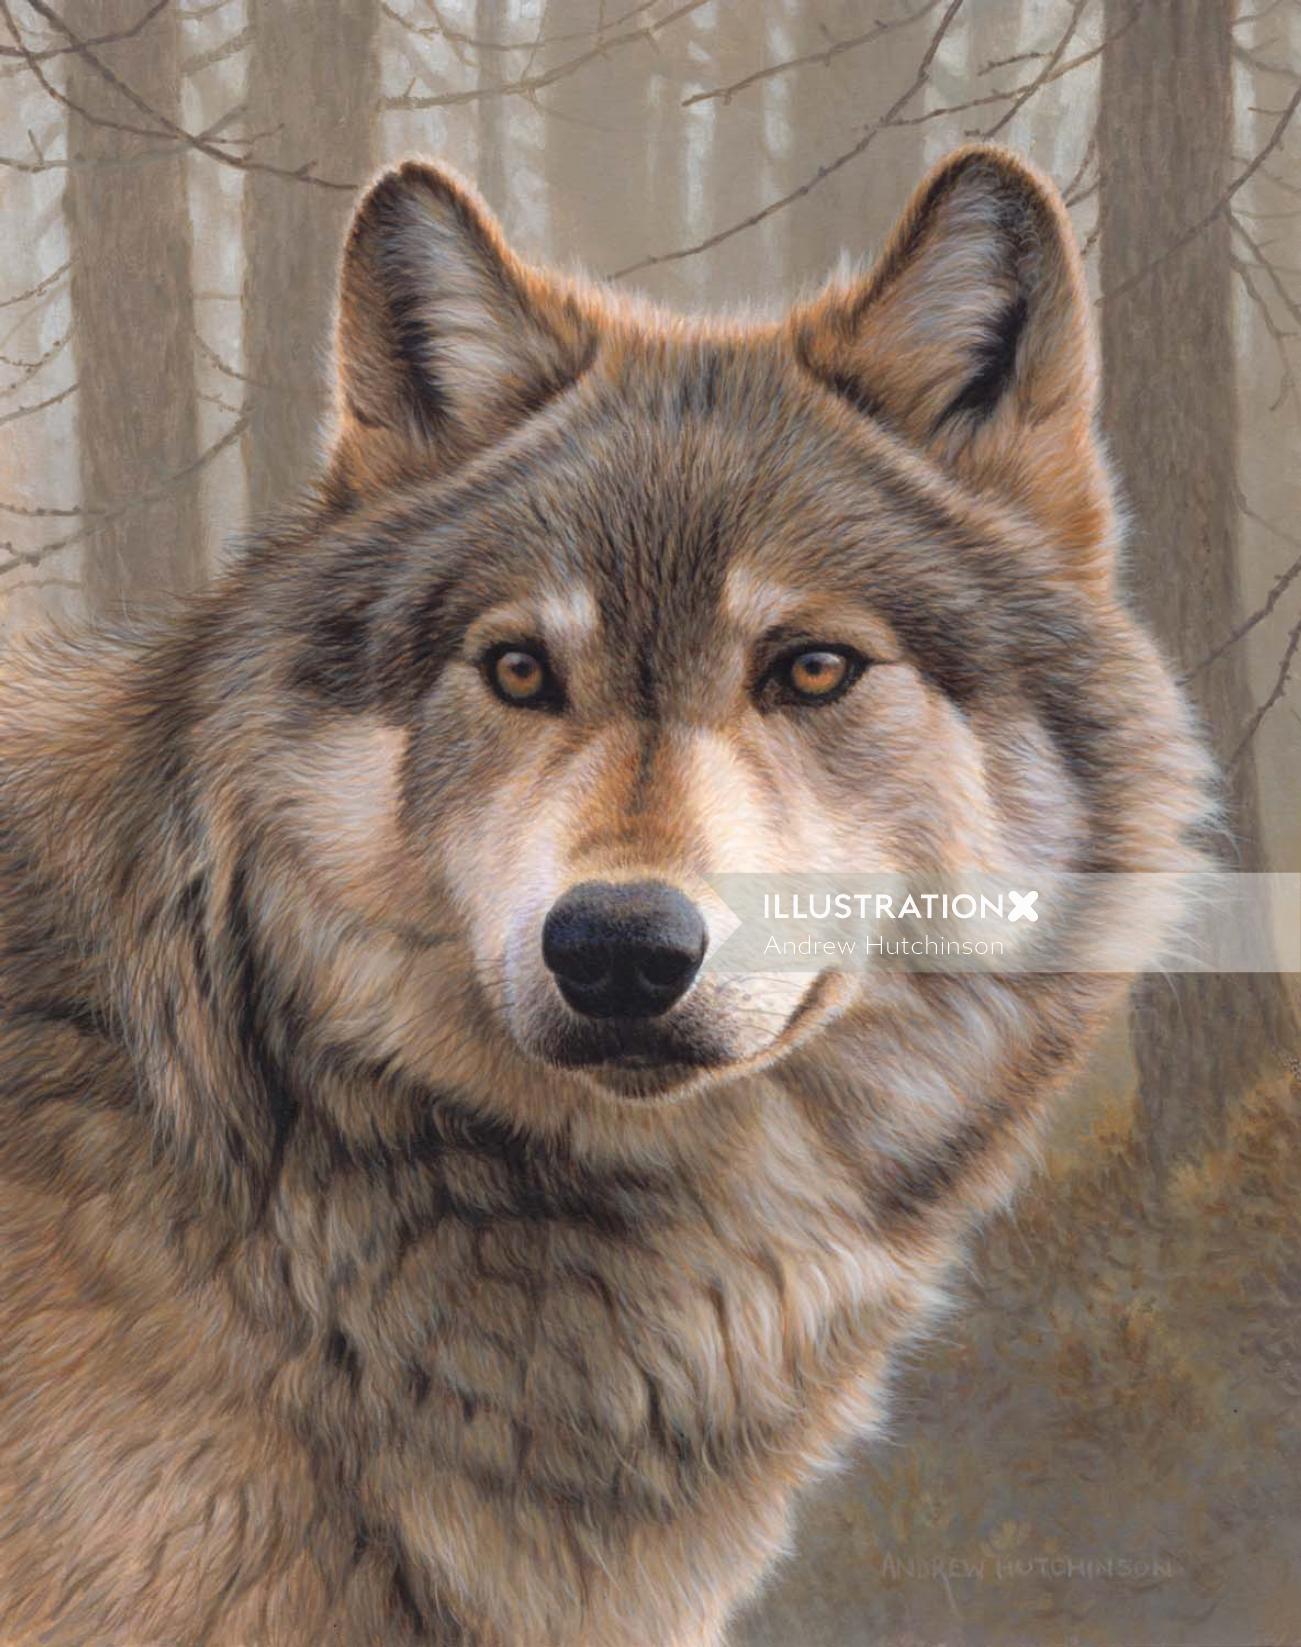 A stunning portrait illustration of Wolf